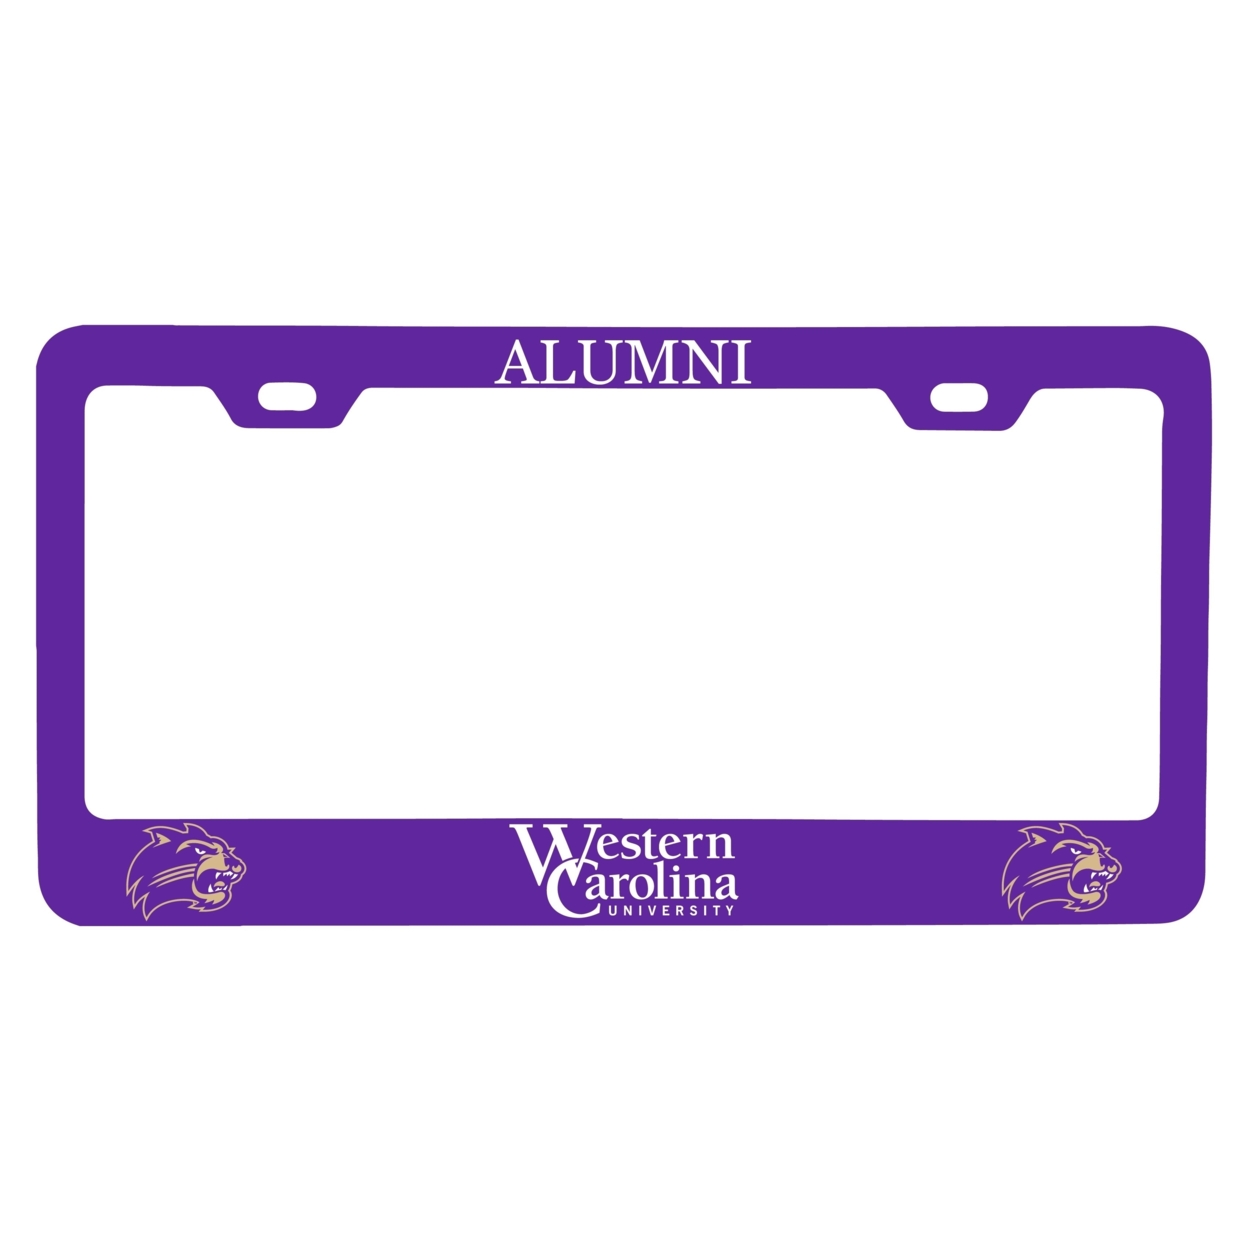 Western Carolina University Alumni License Plate Frame